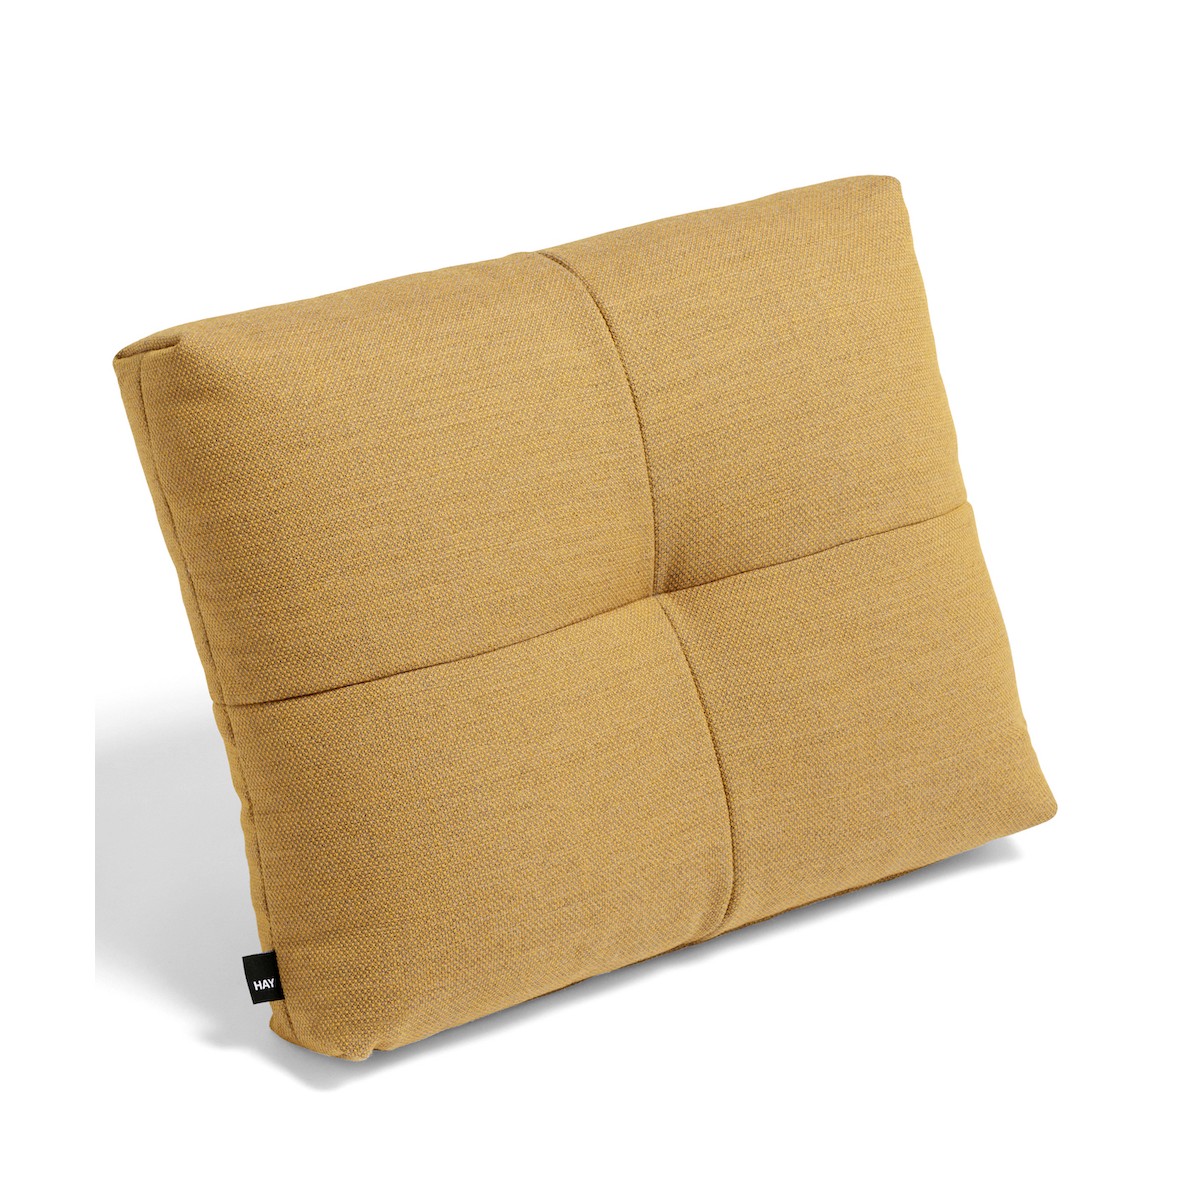 Fiord 442 - Quilton cushion - HAY modular sofa